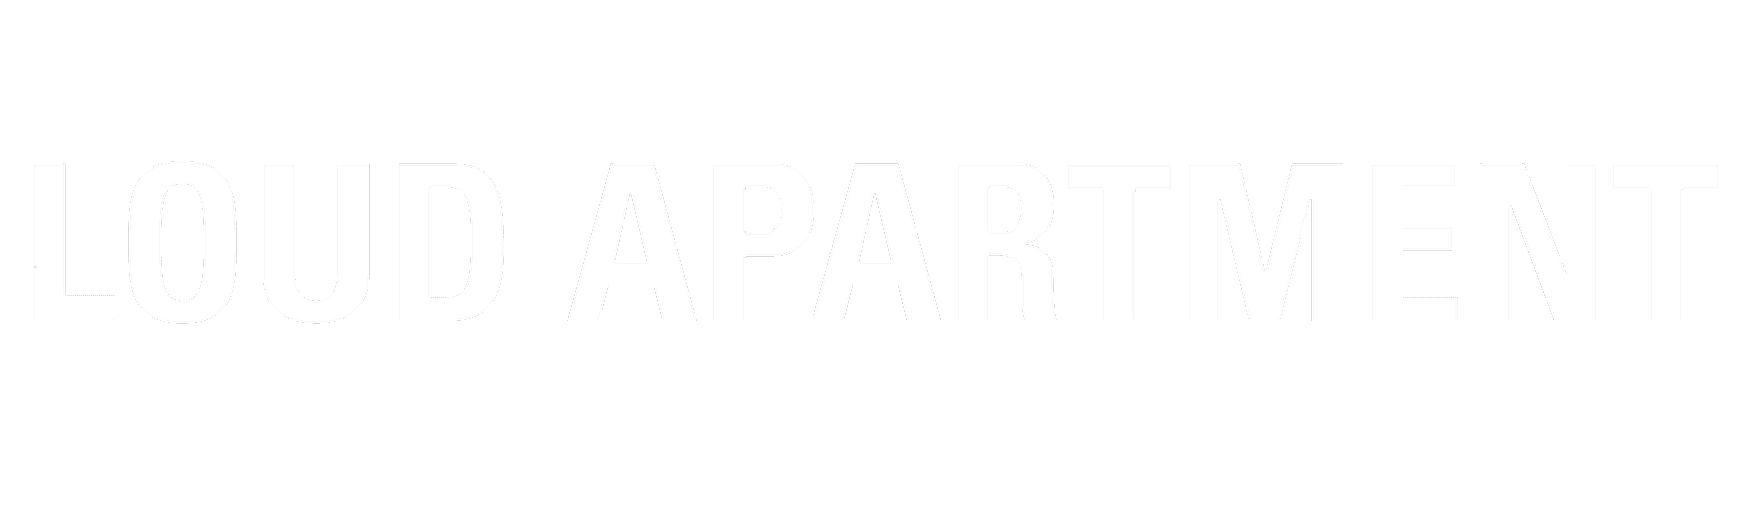 Loud Apartment Logo